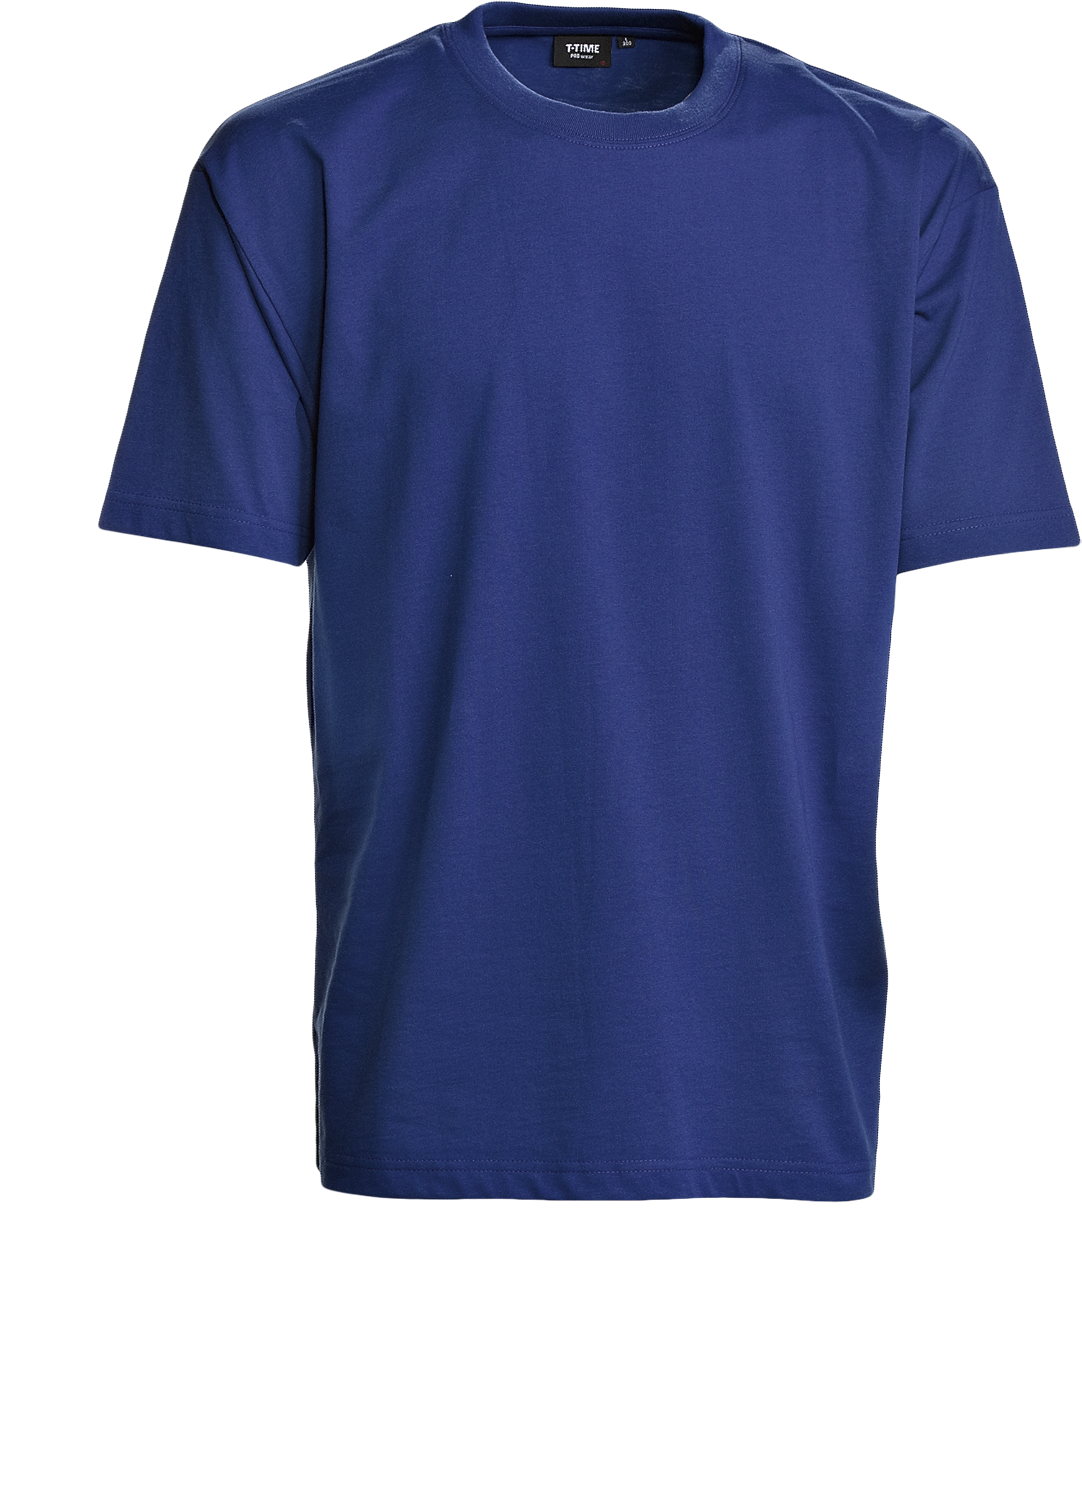 Blå T-Shirt - herre, Prowear (8150211)